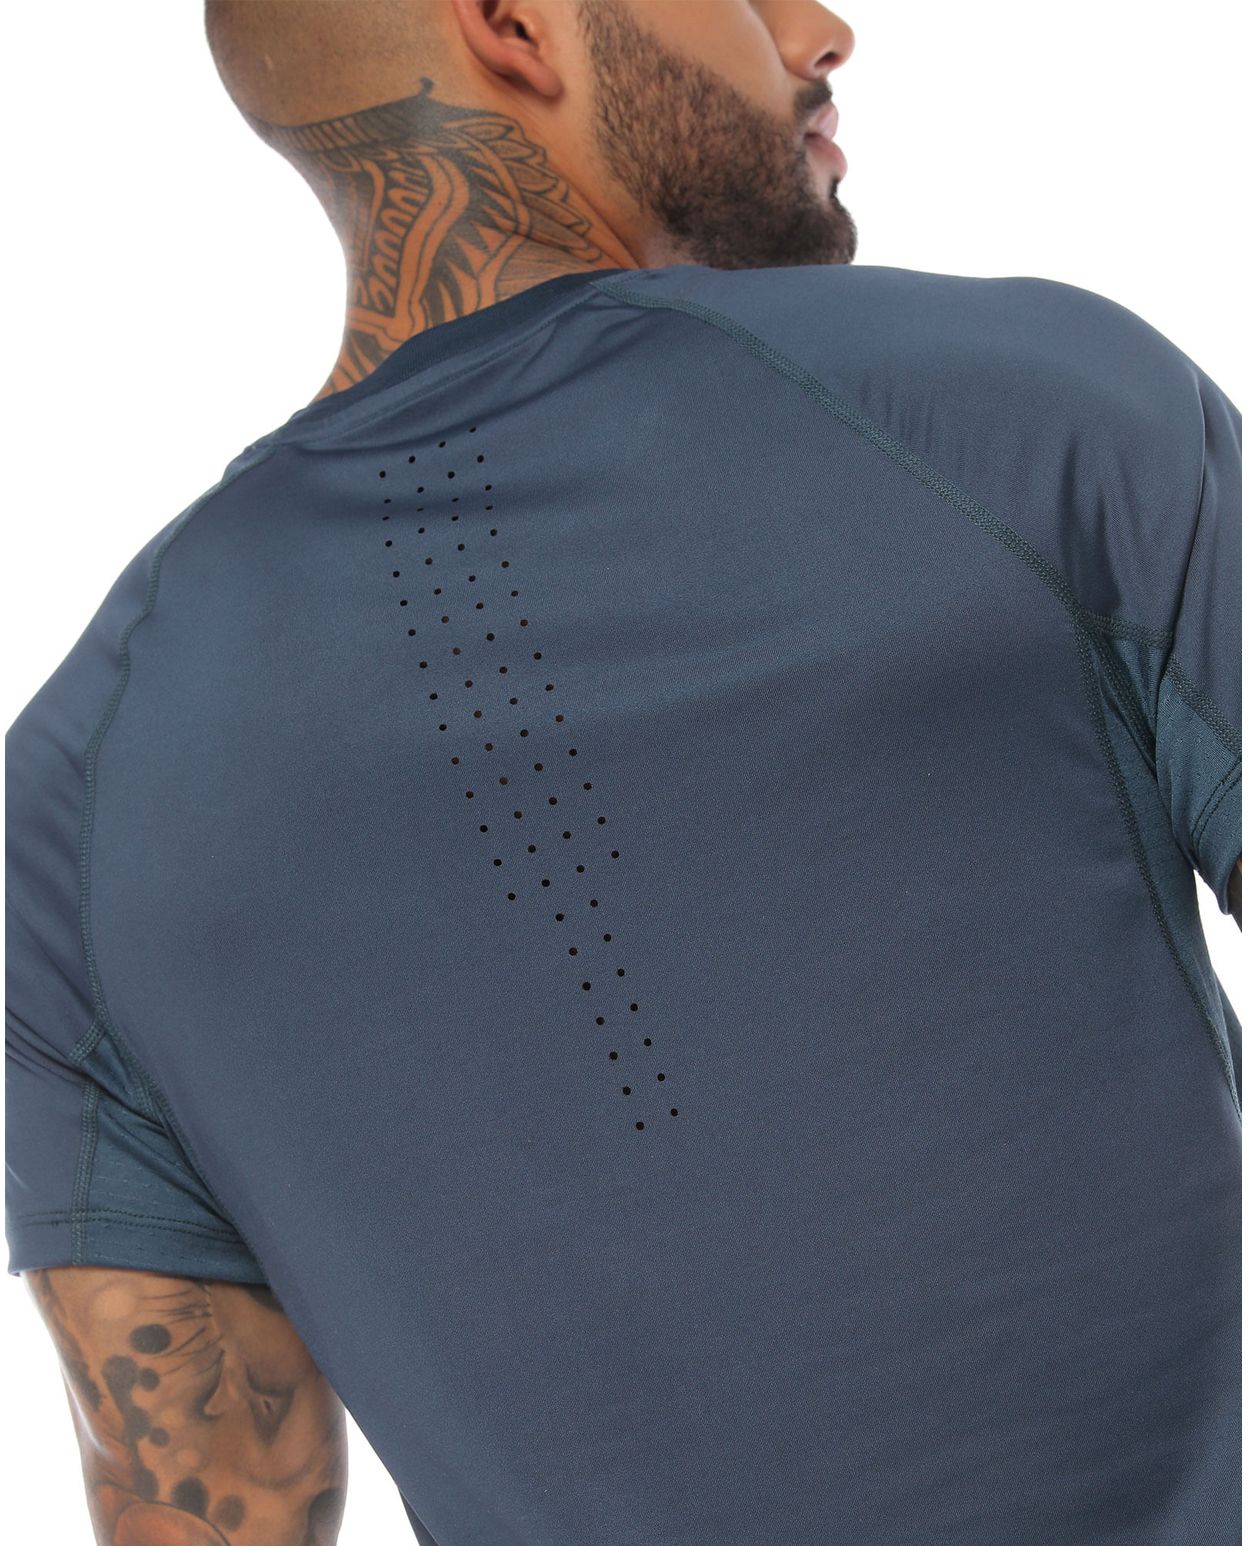 camiseta deportiva color azul petroleo para hombre con cortes transpirables parte trasera